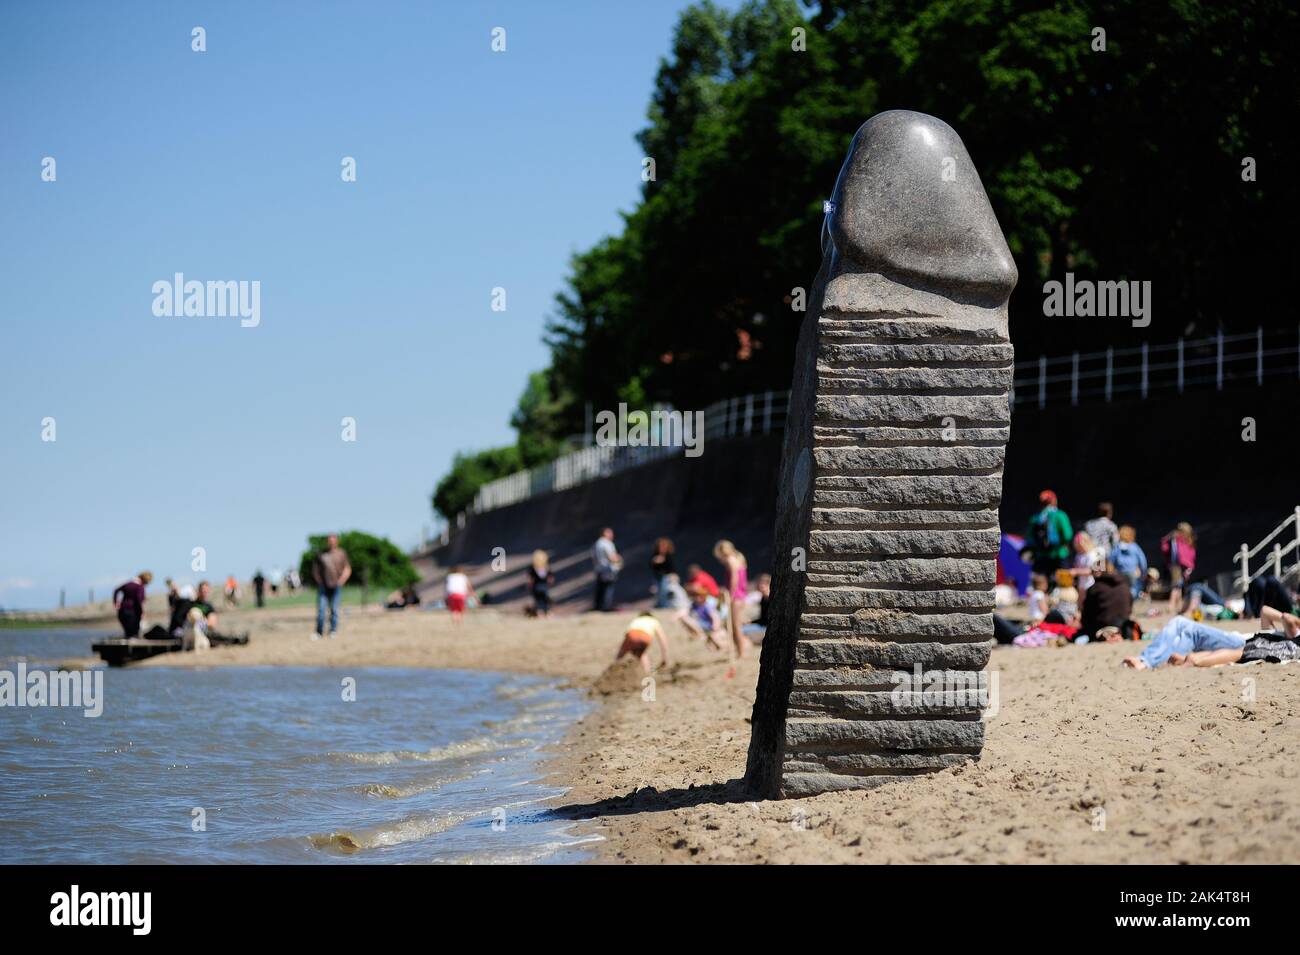 Dangast : Kunst am Meer, Skulptur 'Grenzstein' Eckart von Grenzer, Ostfriesland | conditions dans le monde entier Banque D'Images